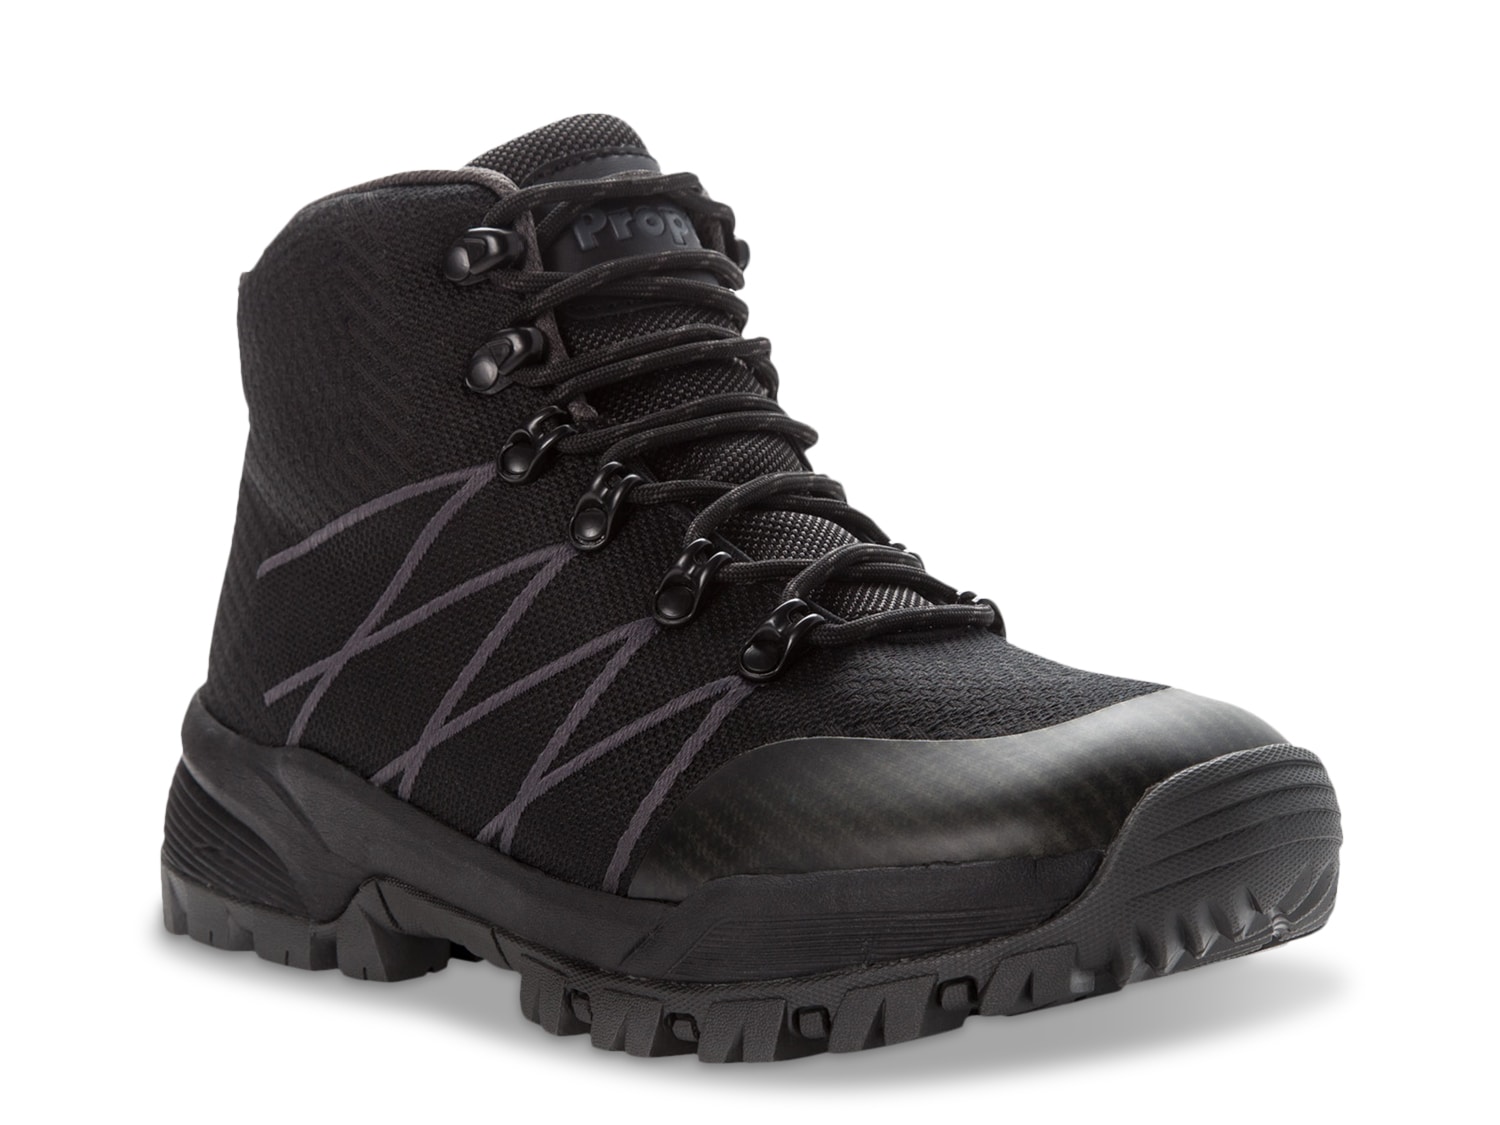 Propet Traverse Hiking Boot - Men's - Free Shipping | DSW